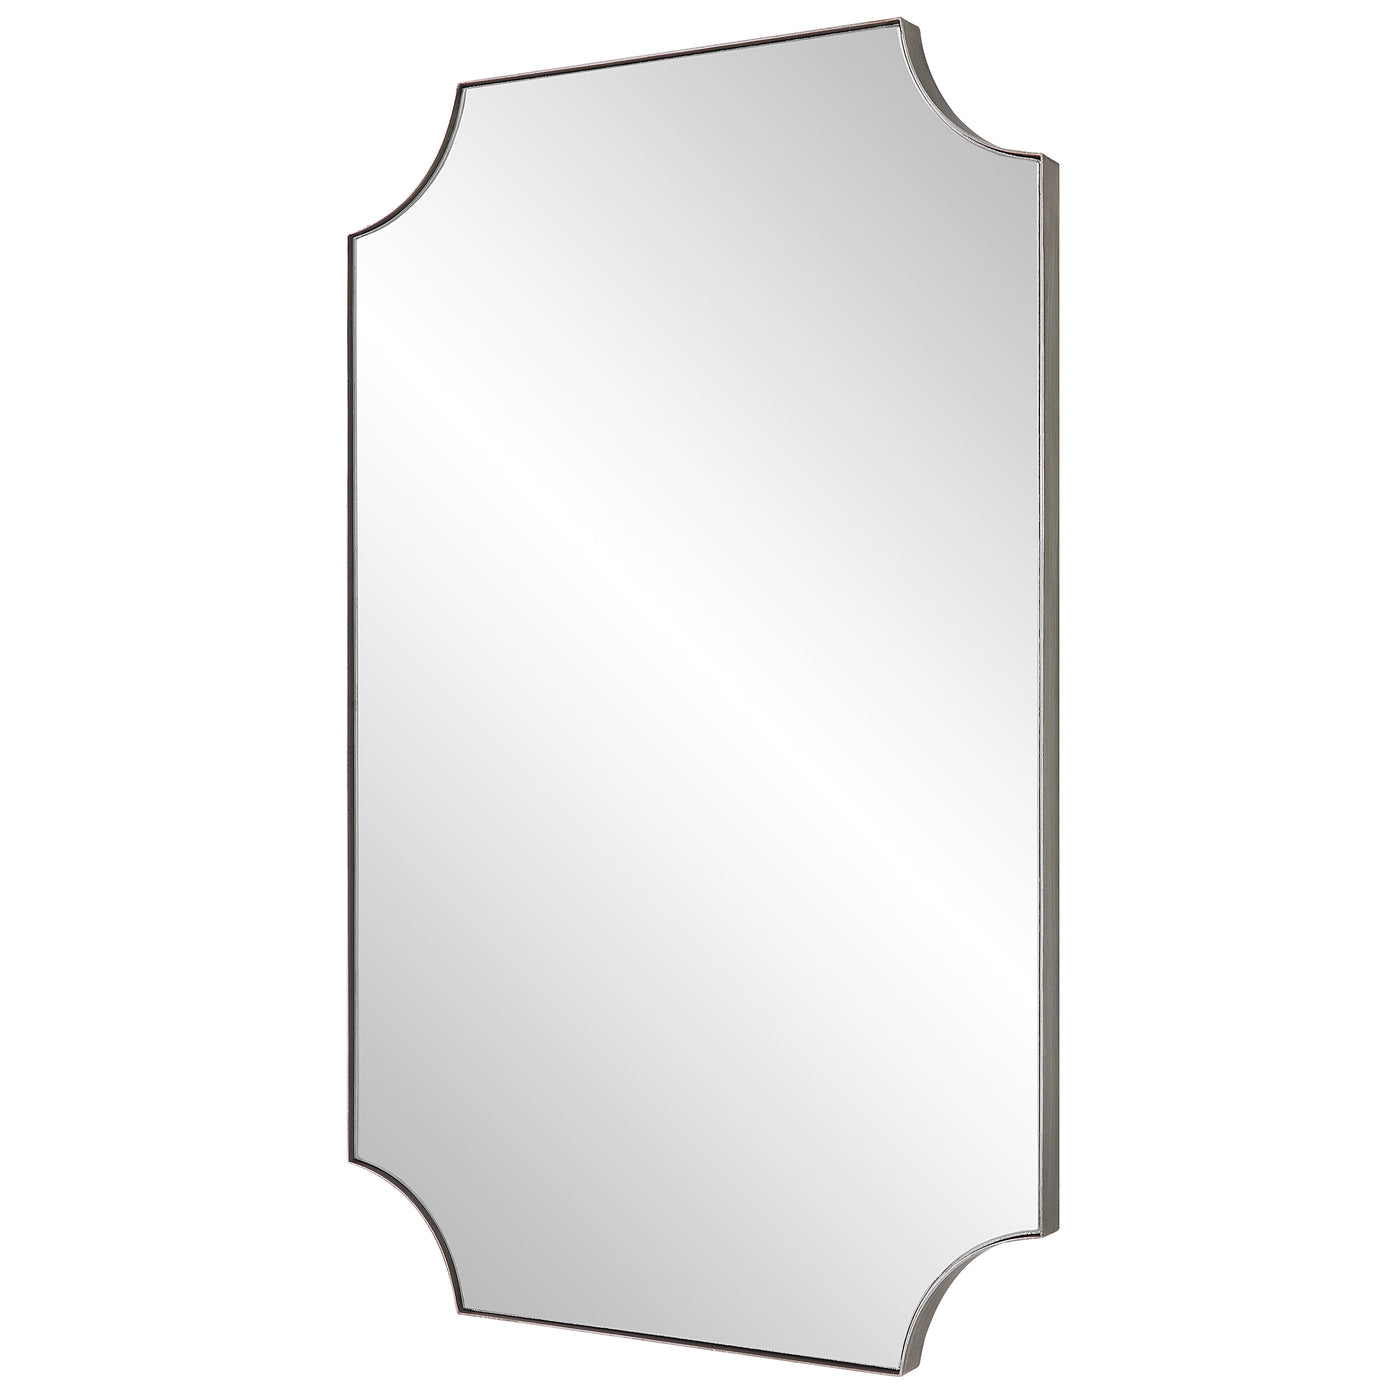 The Elmhurst Mirror